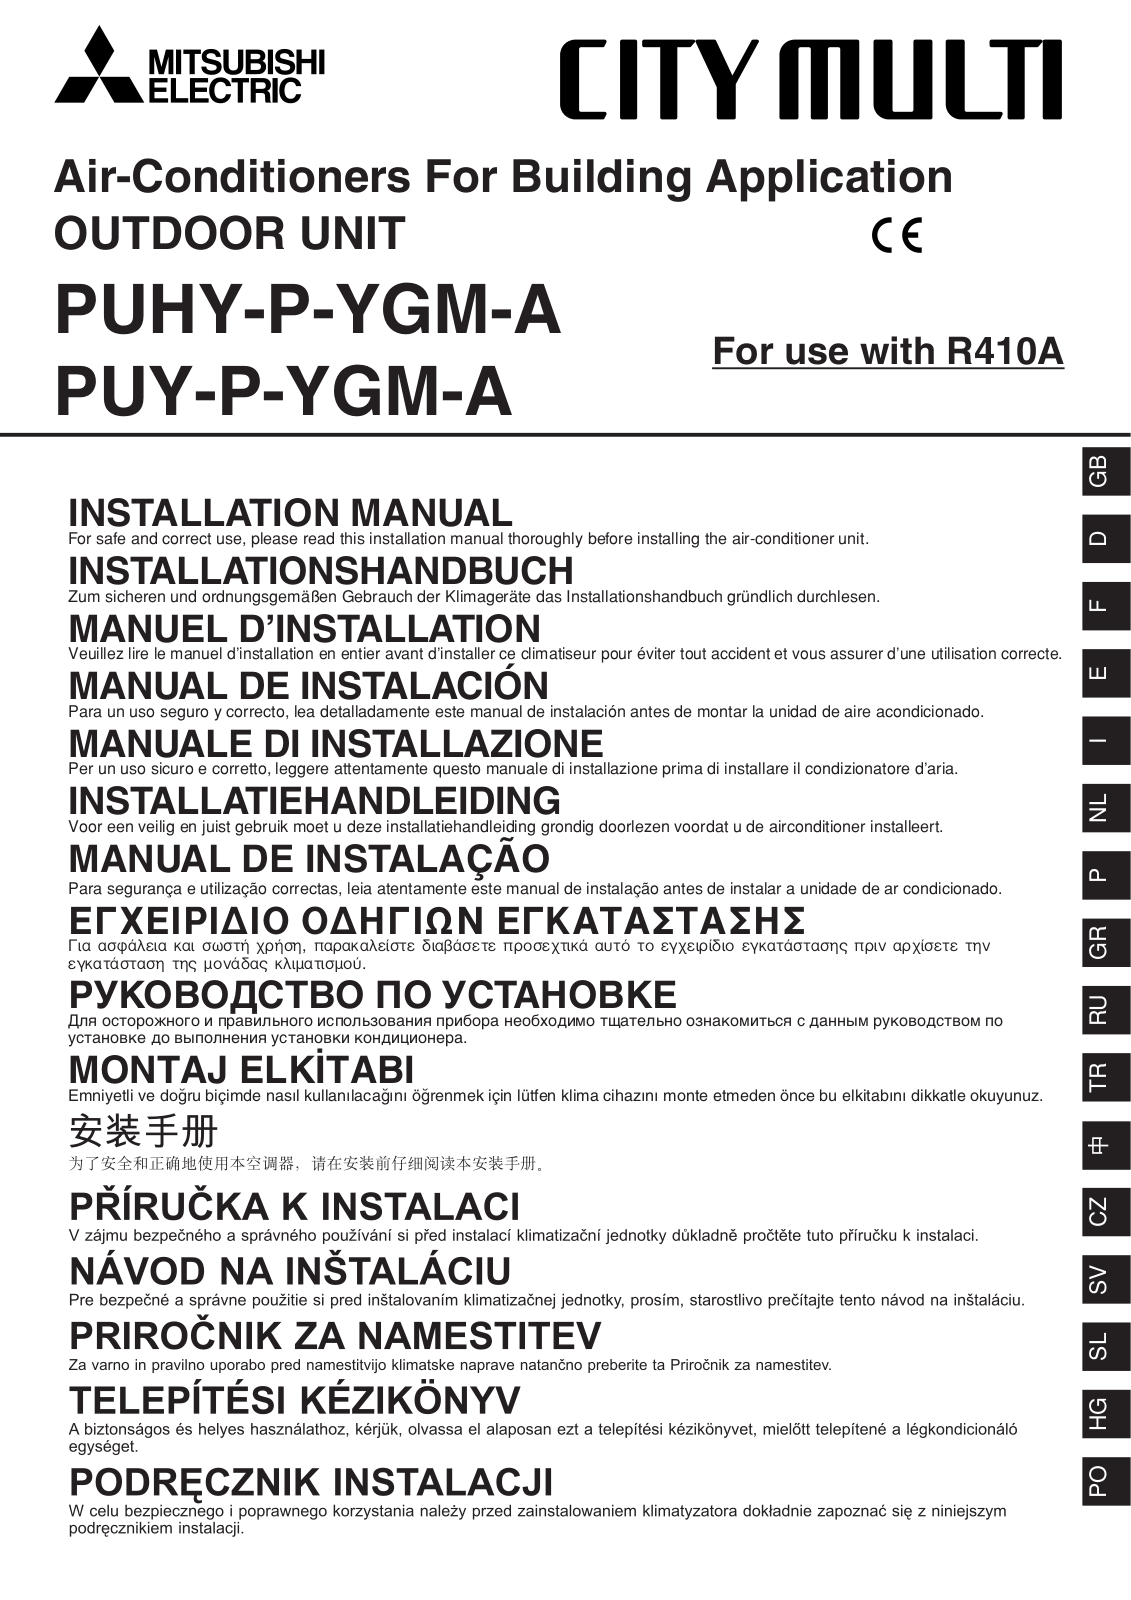 Mitsubishi PUHY-P-YGM-A, PUY-P-YGM-A Installation Manual